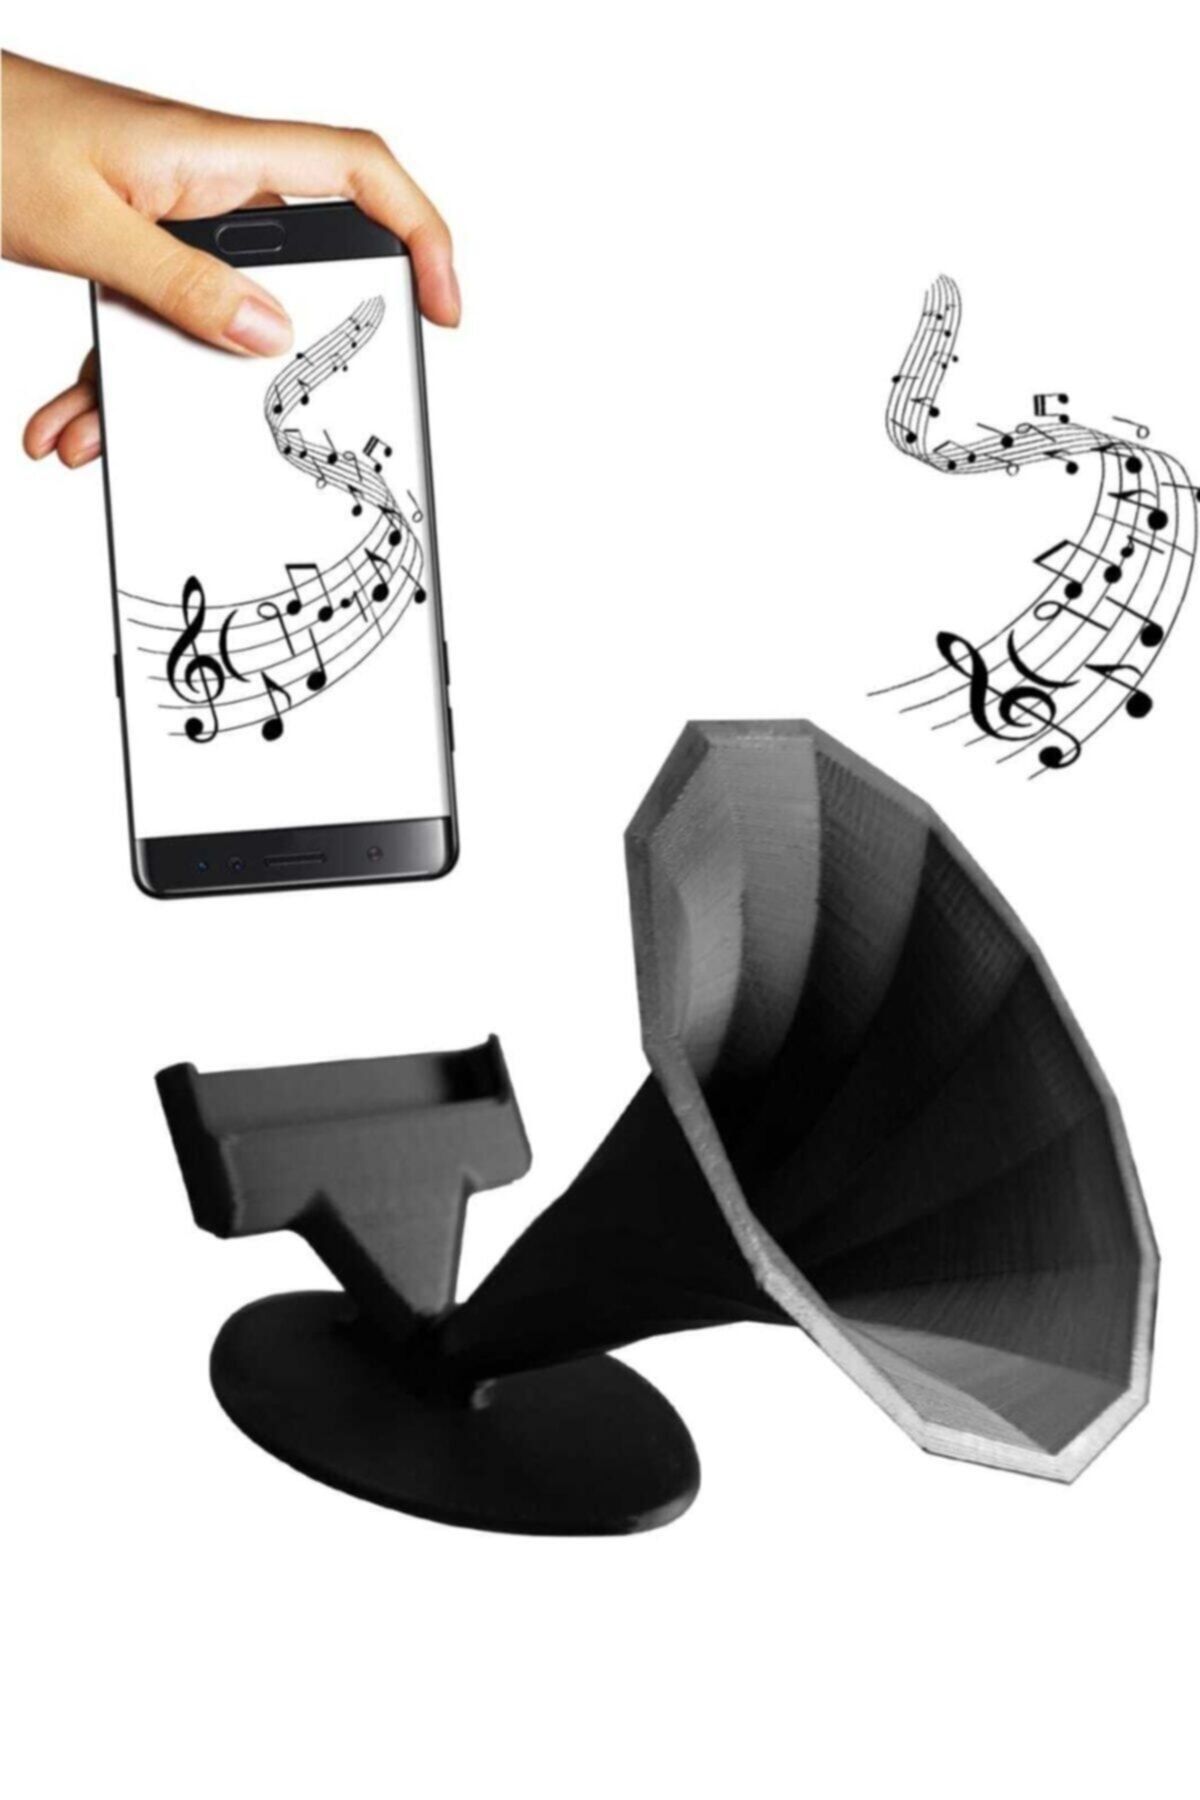 İskontoBurada Ses Bombası Akustik Telefon Tutucu Kablosuz Gramafon Hoparlör Siyah